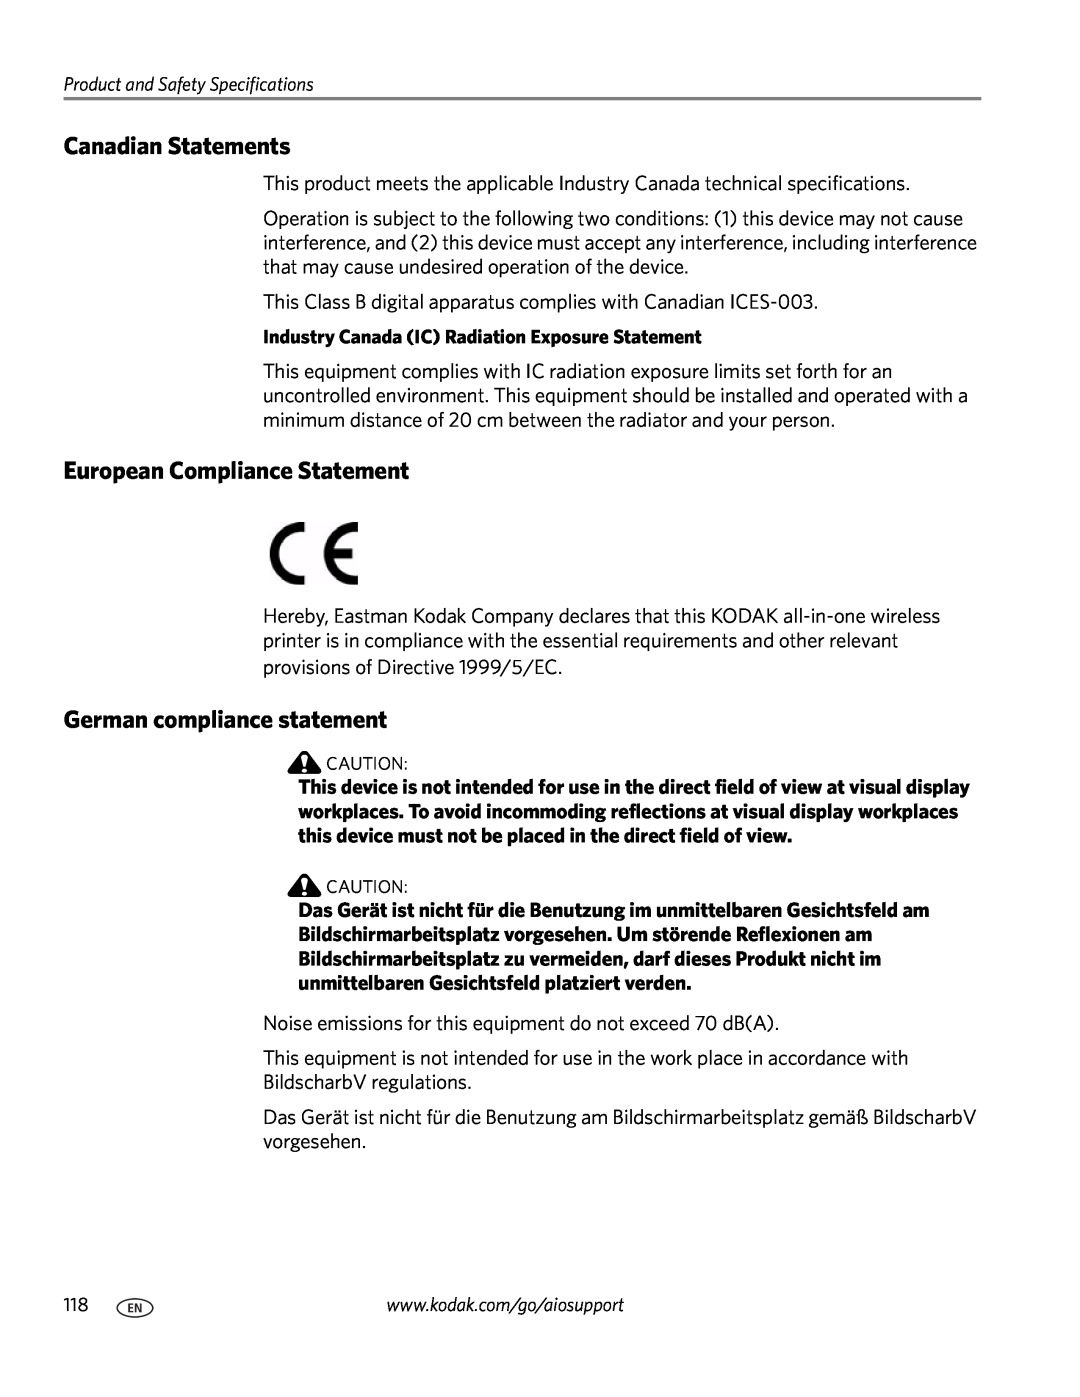 Kodak 7.1 manual Canadian Statements, European Compliance Statement, German compliance statement 